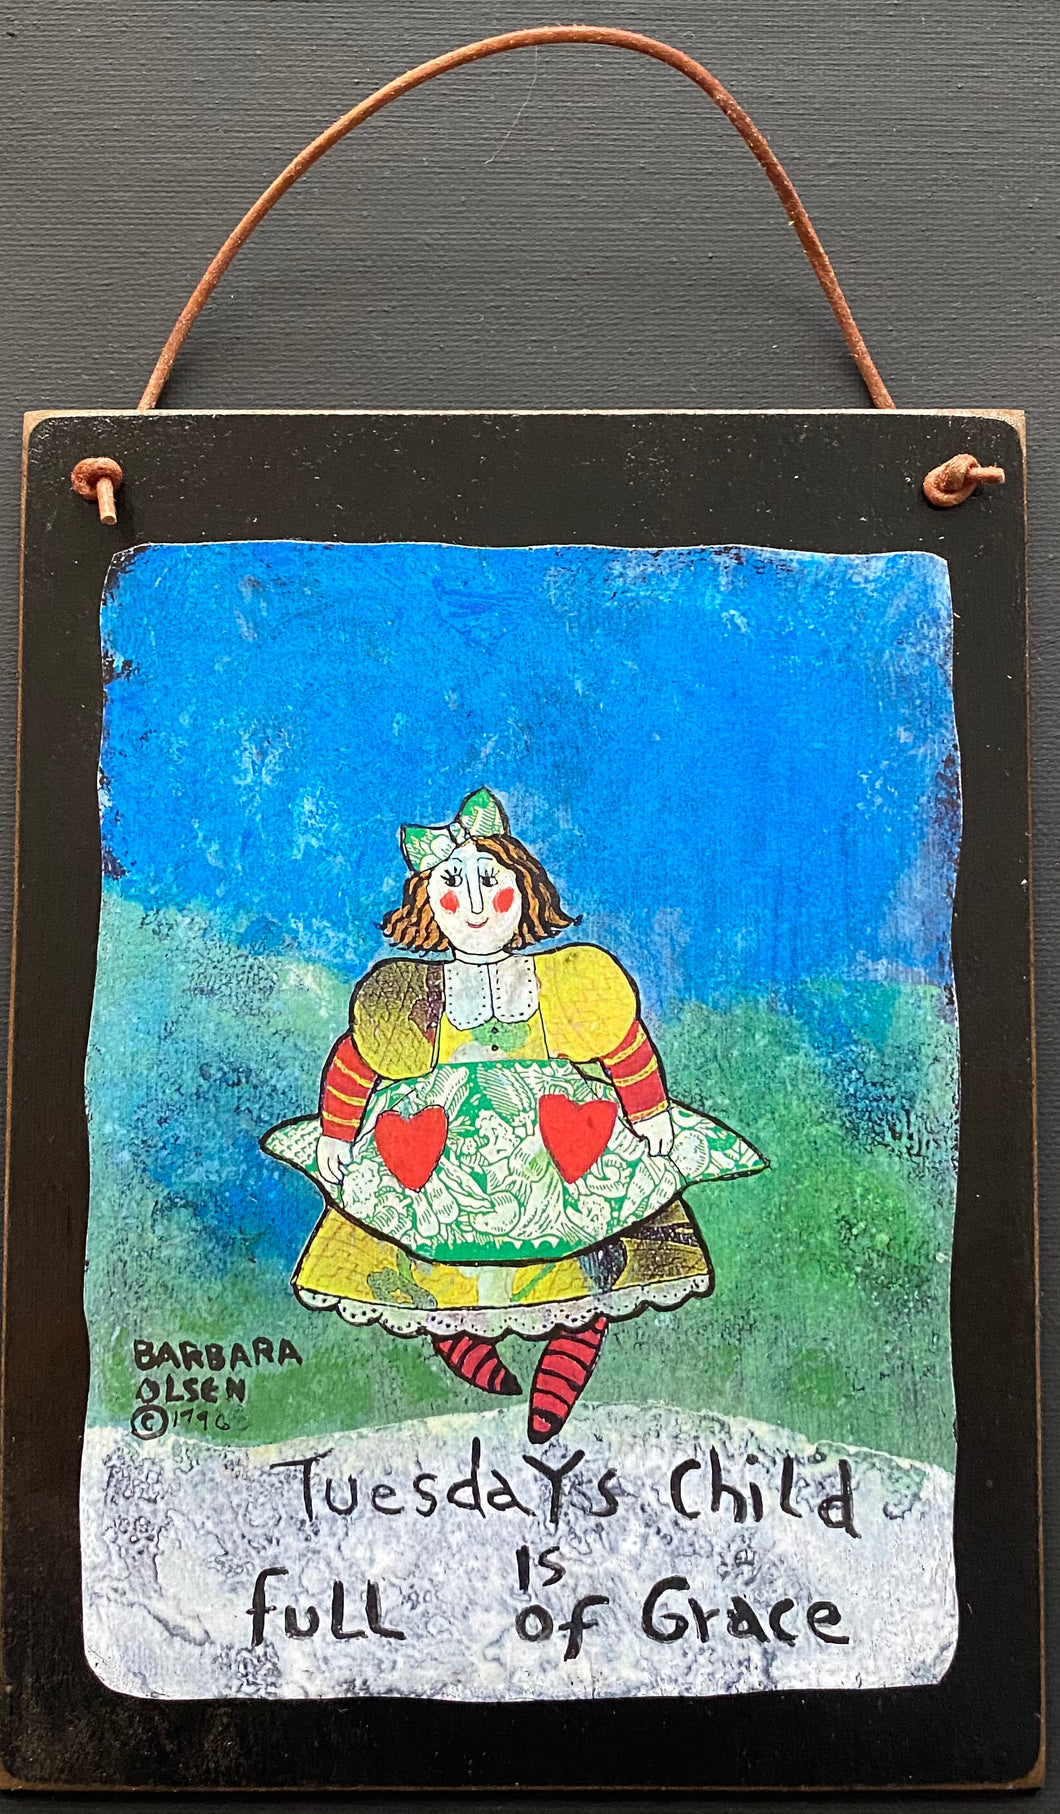 Tuesday Girl - Old Days Hanging Plaque - Barbara Olsen